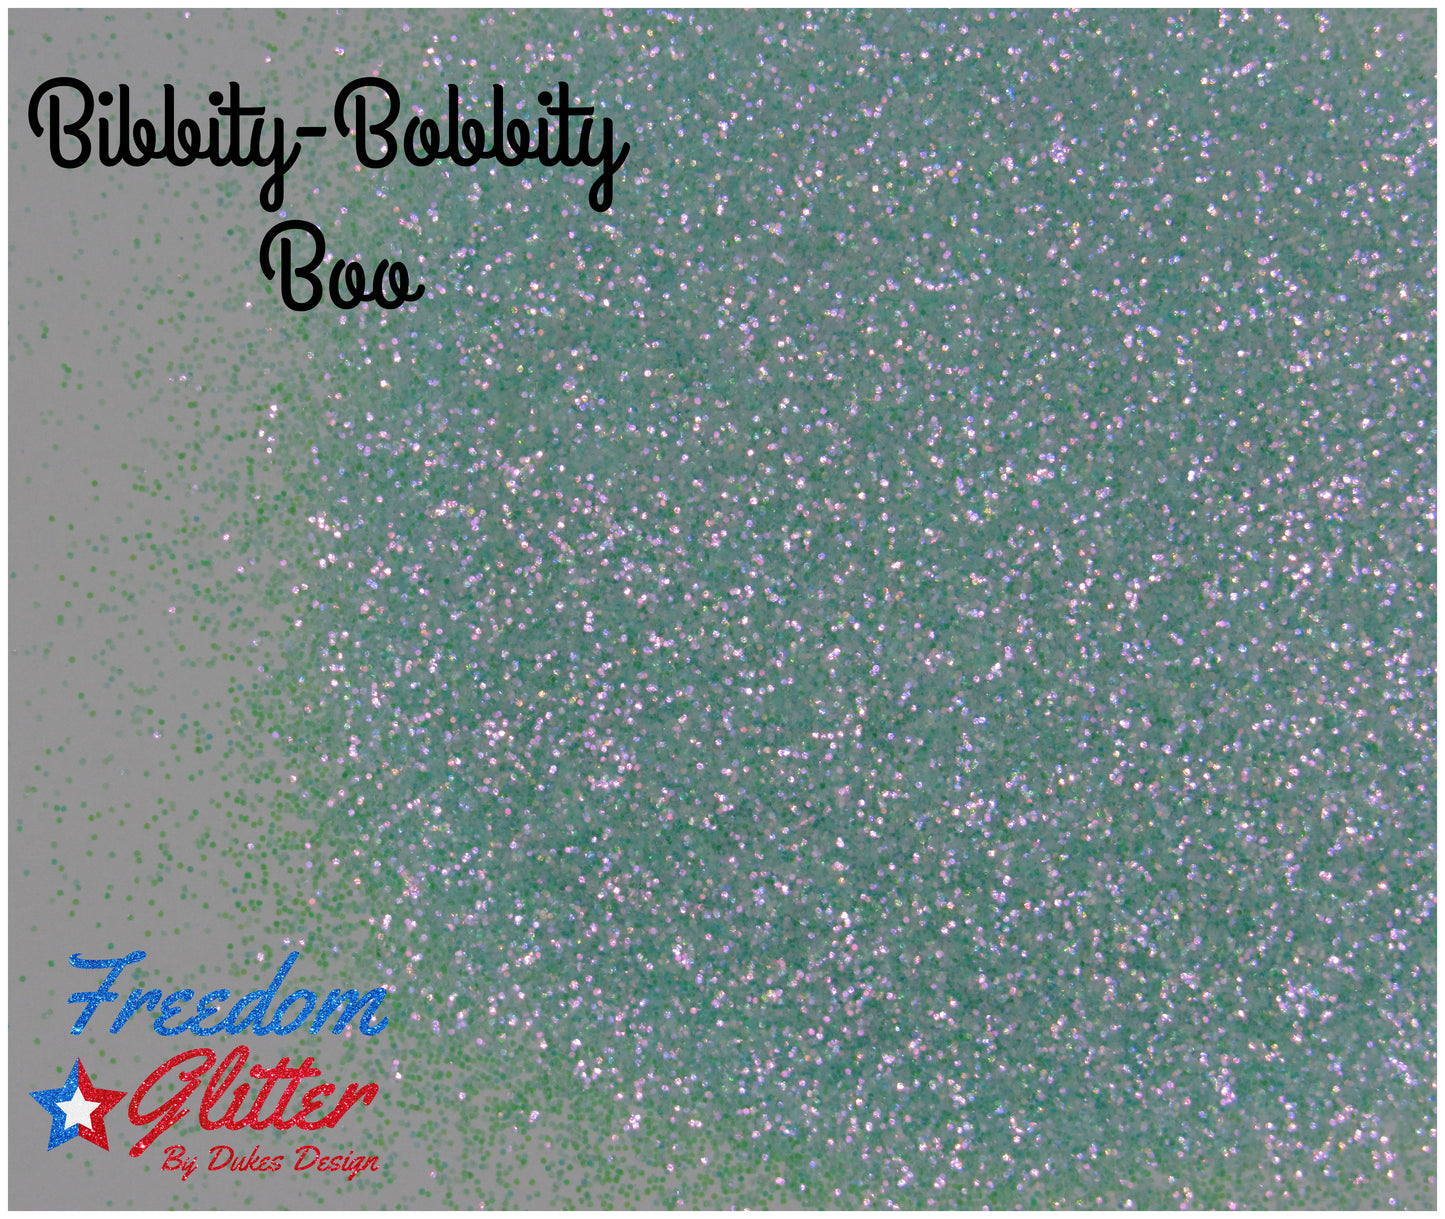 Bibbity-Bobbity Boo (High Sparkle Iridescent Glitter)